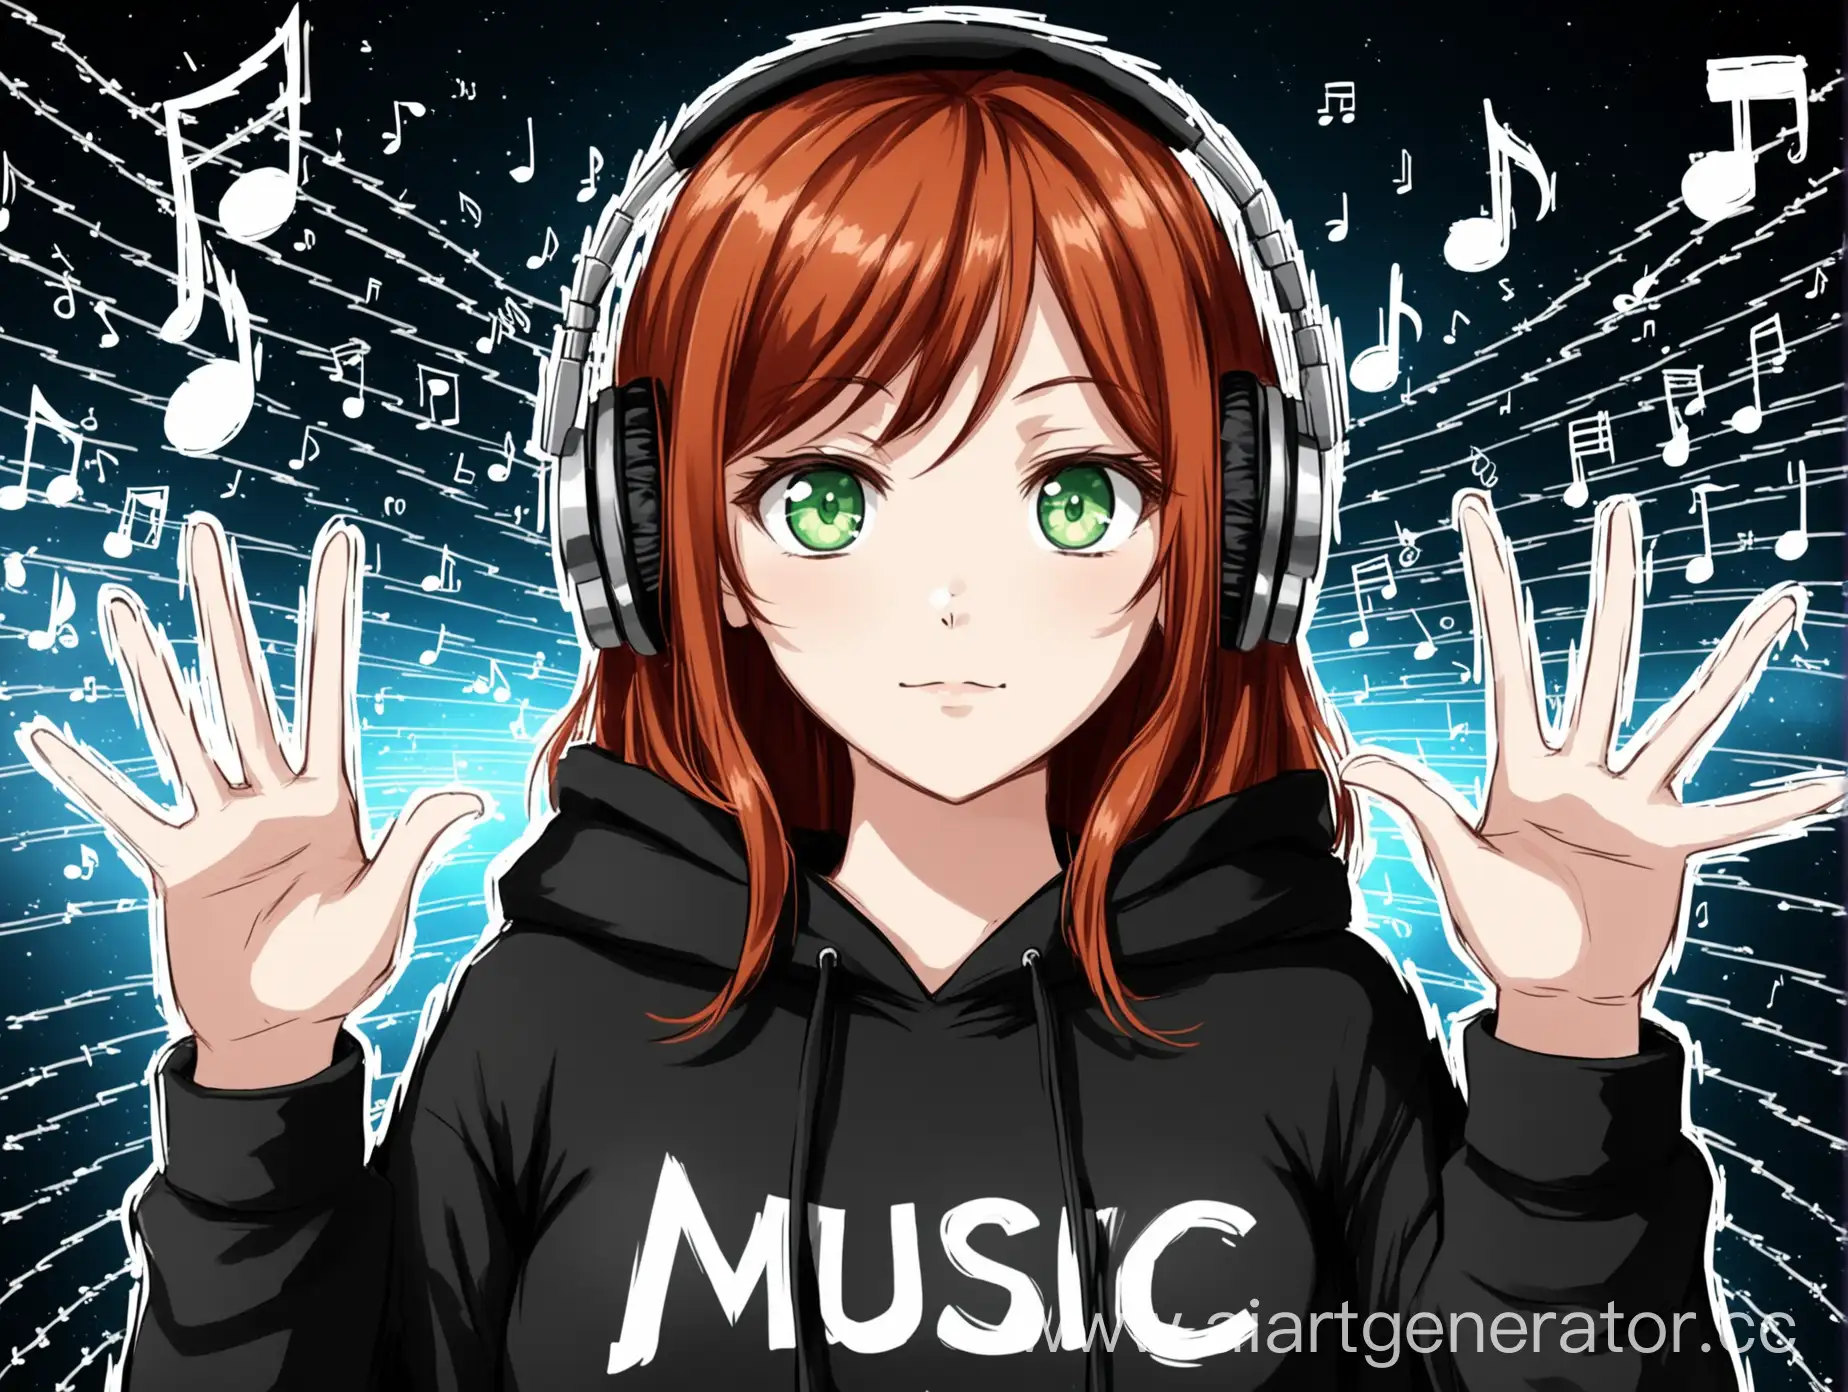 Anime-Girl-with-Green-Eyes-and-Auburn-Hair-Wearing-Black-Hoodie-and-Headphones-Gesturing-Rock-Sign